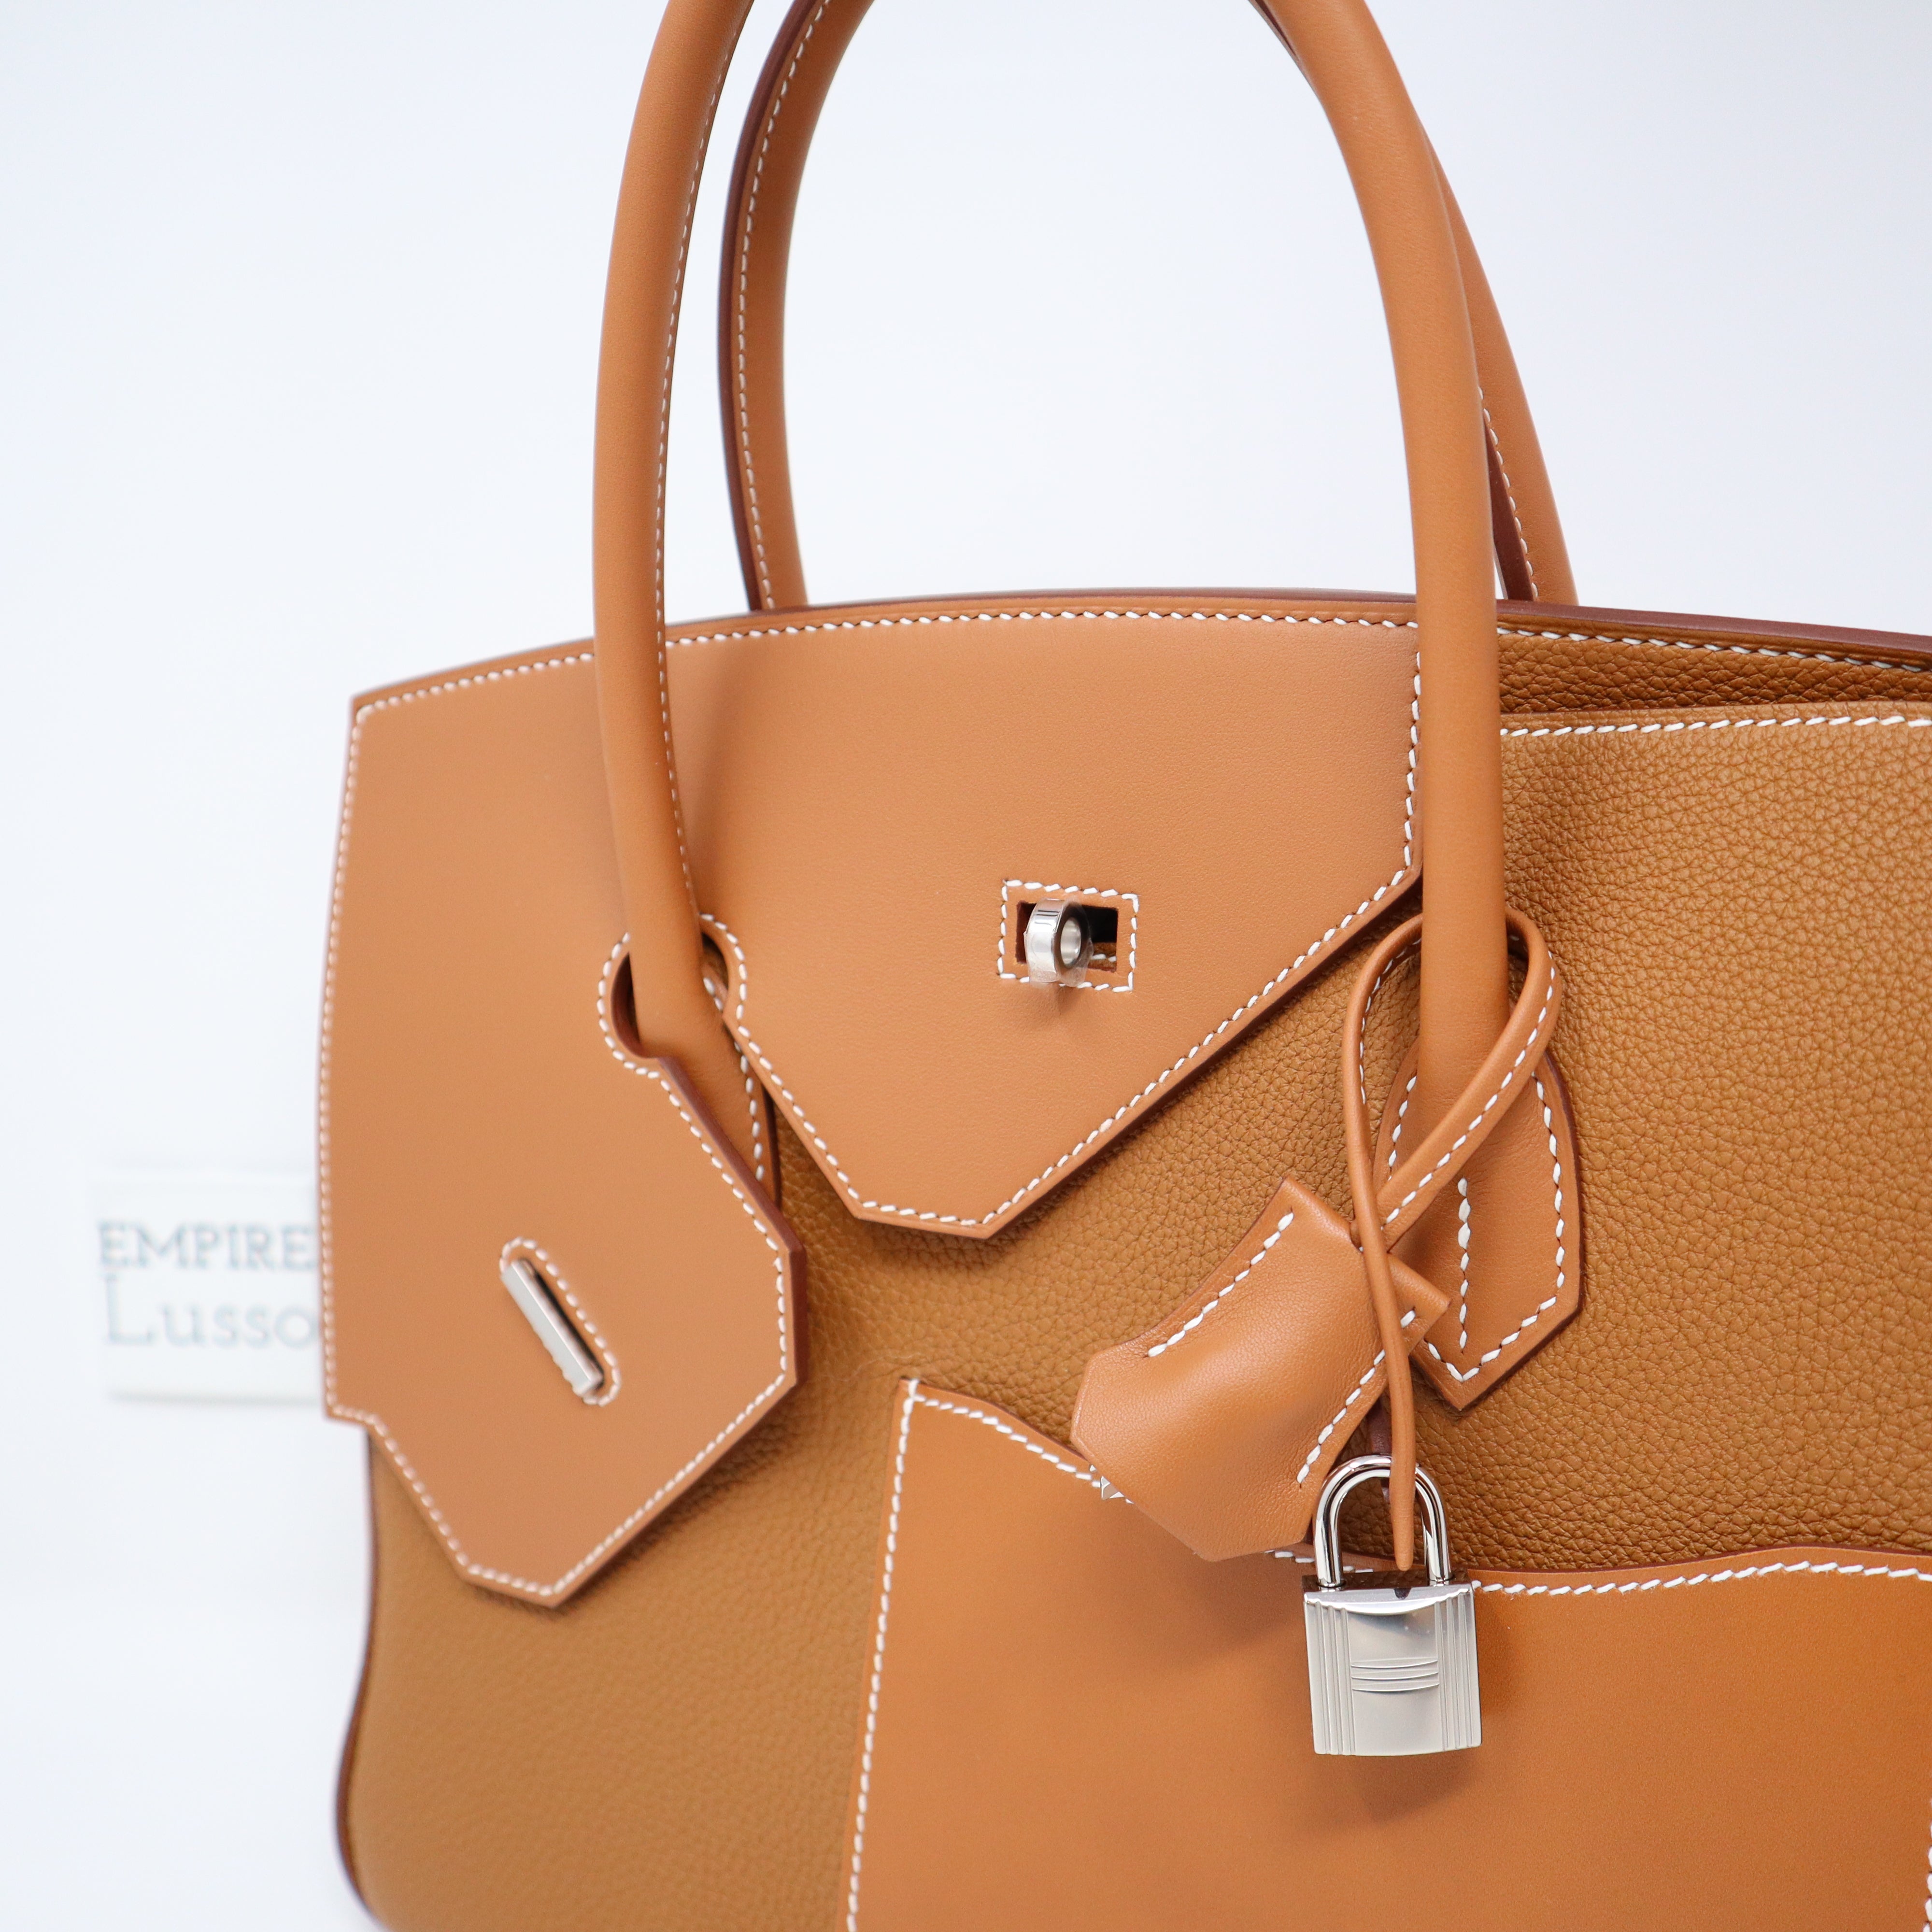 Hermès Birkin 25 Rose Lipstick Leather Bag